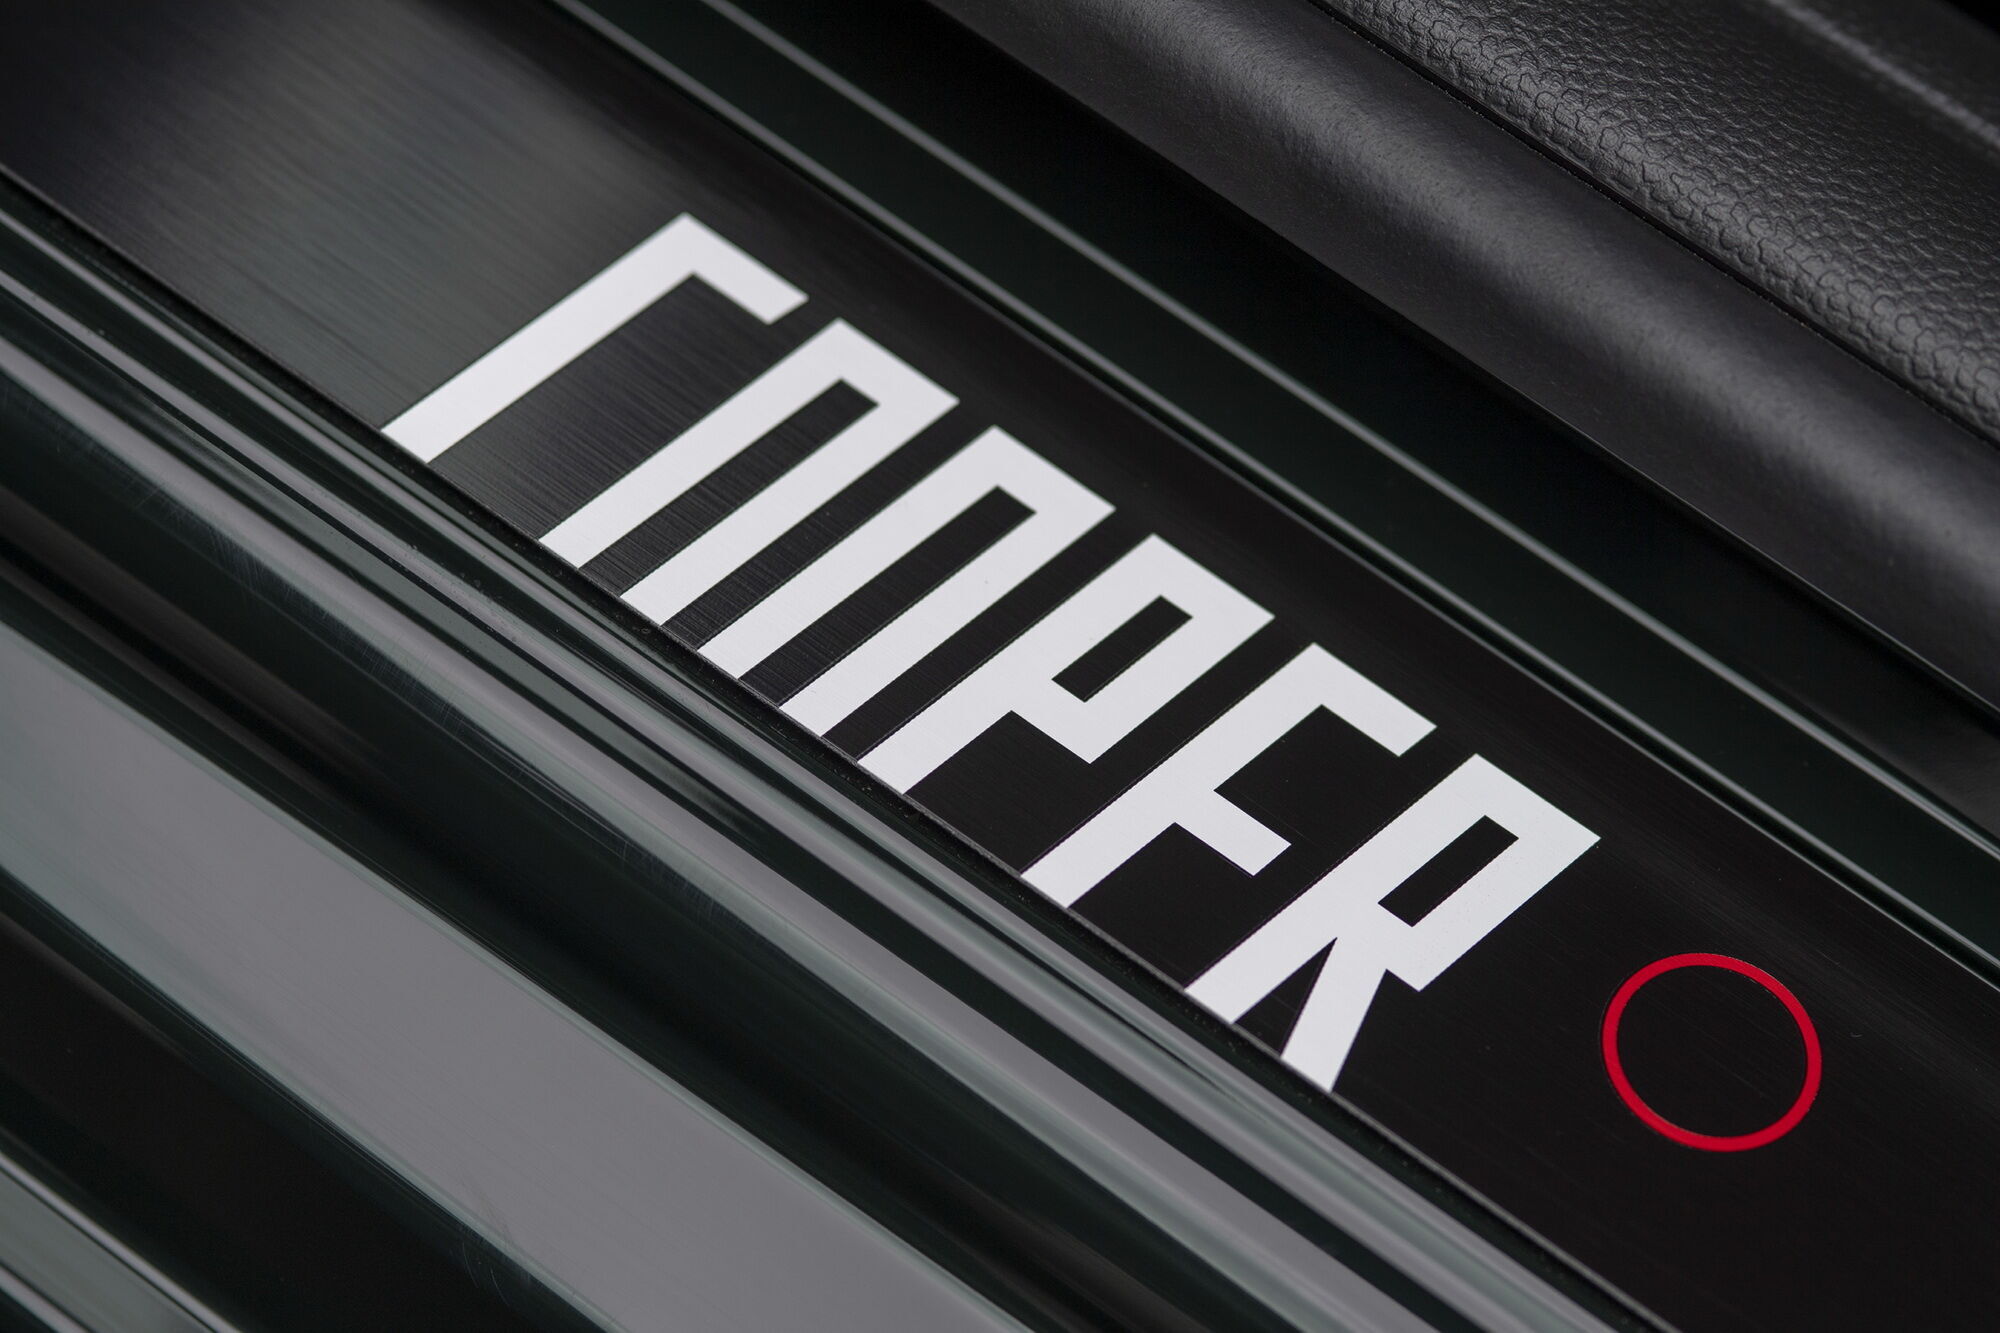 Приладову панель і дверні прорізи прикрасили емблемами на честь Cooper Car Company